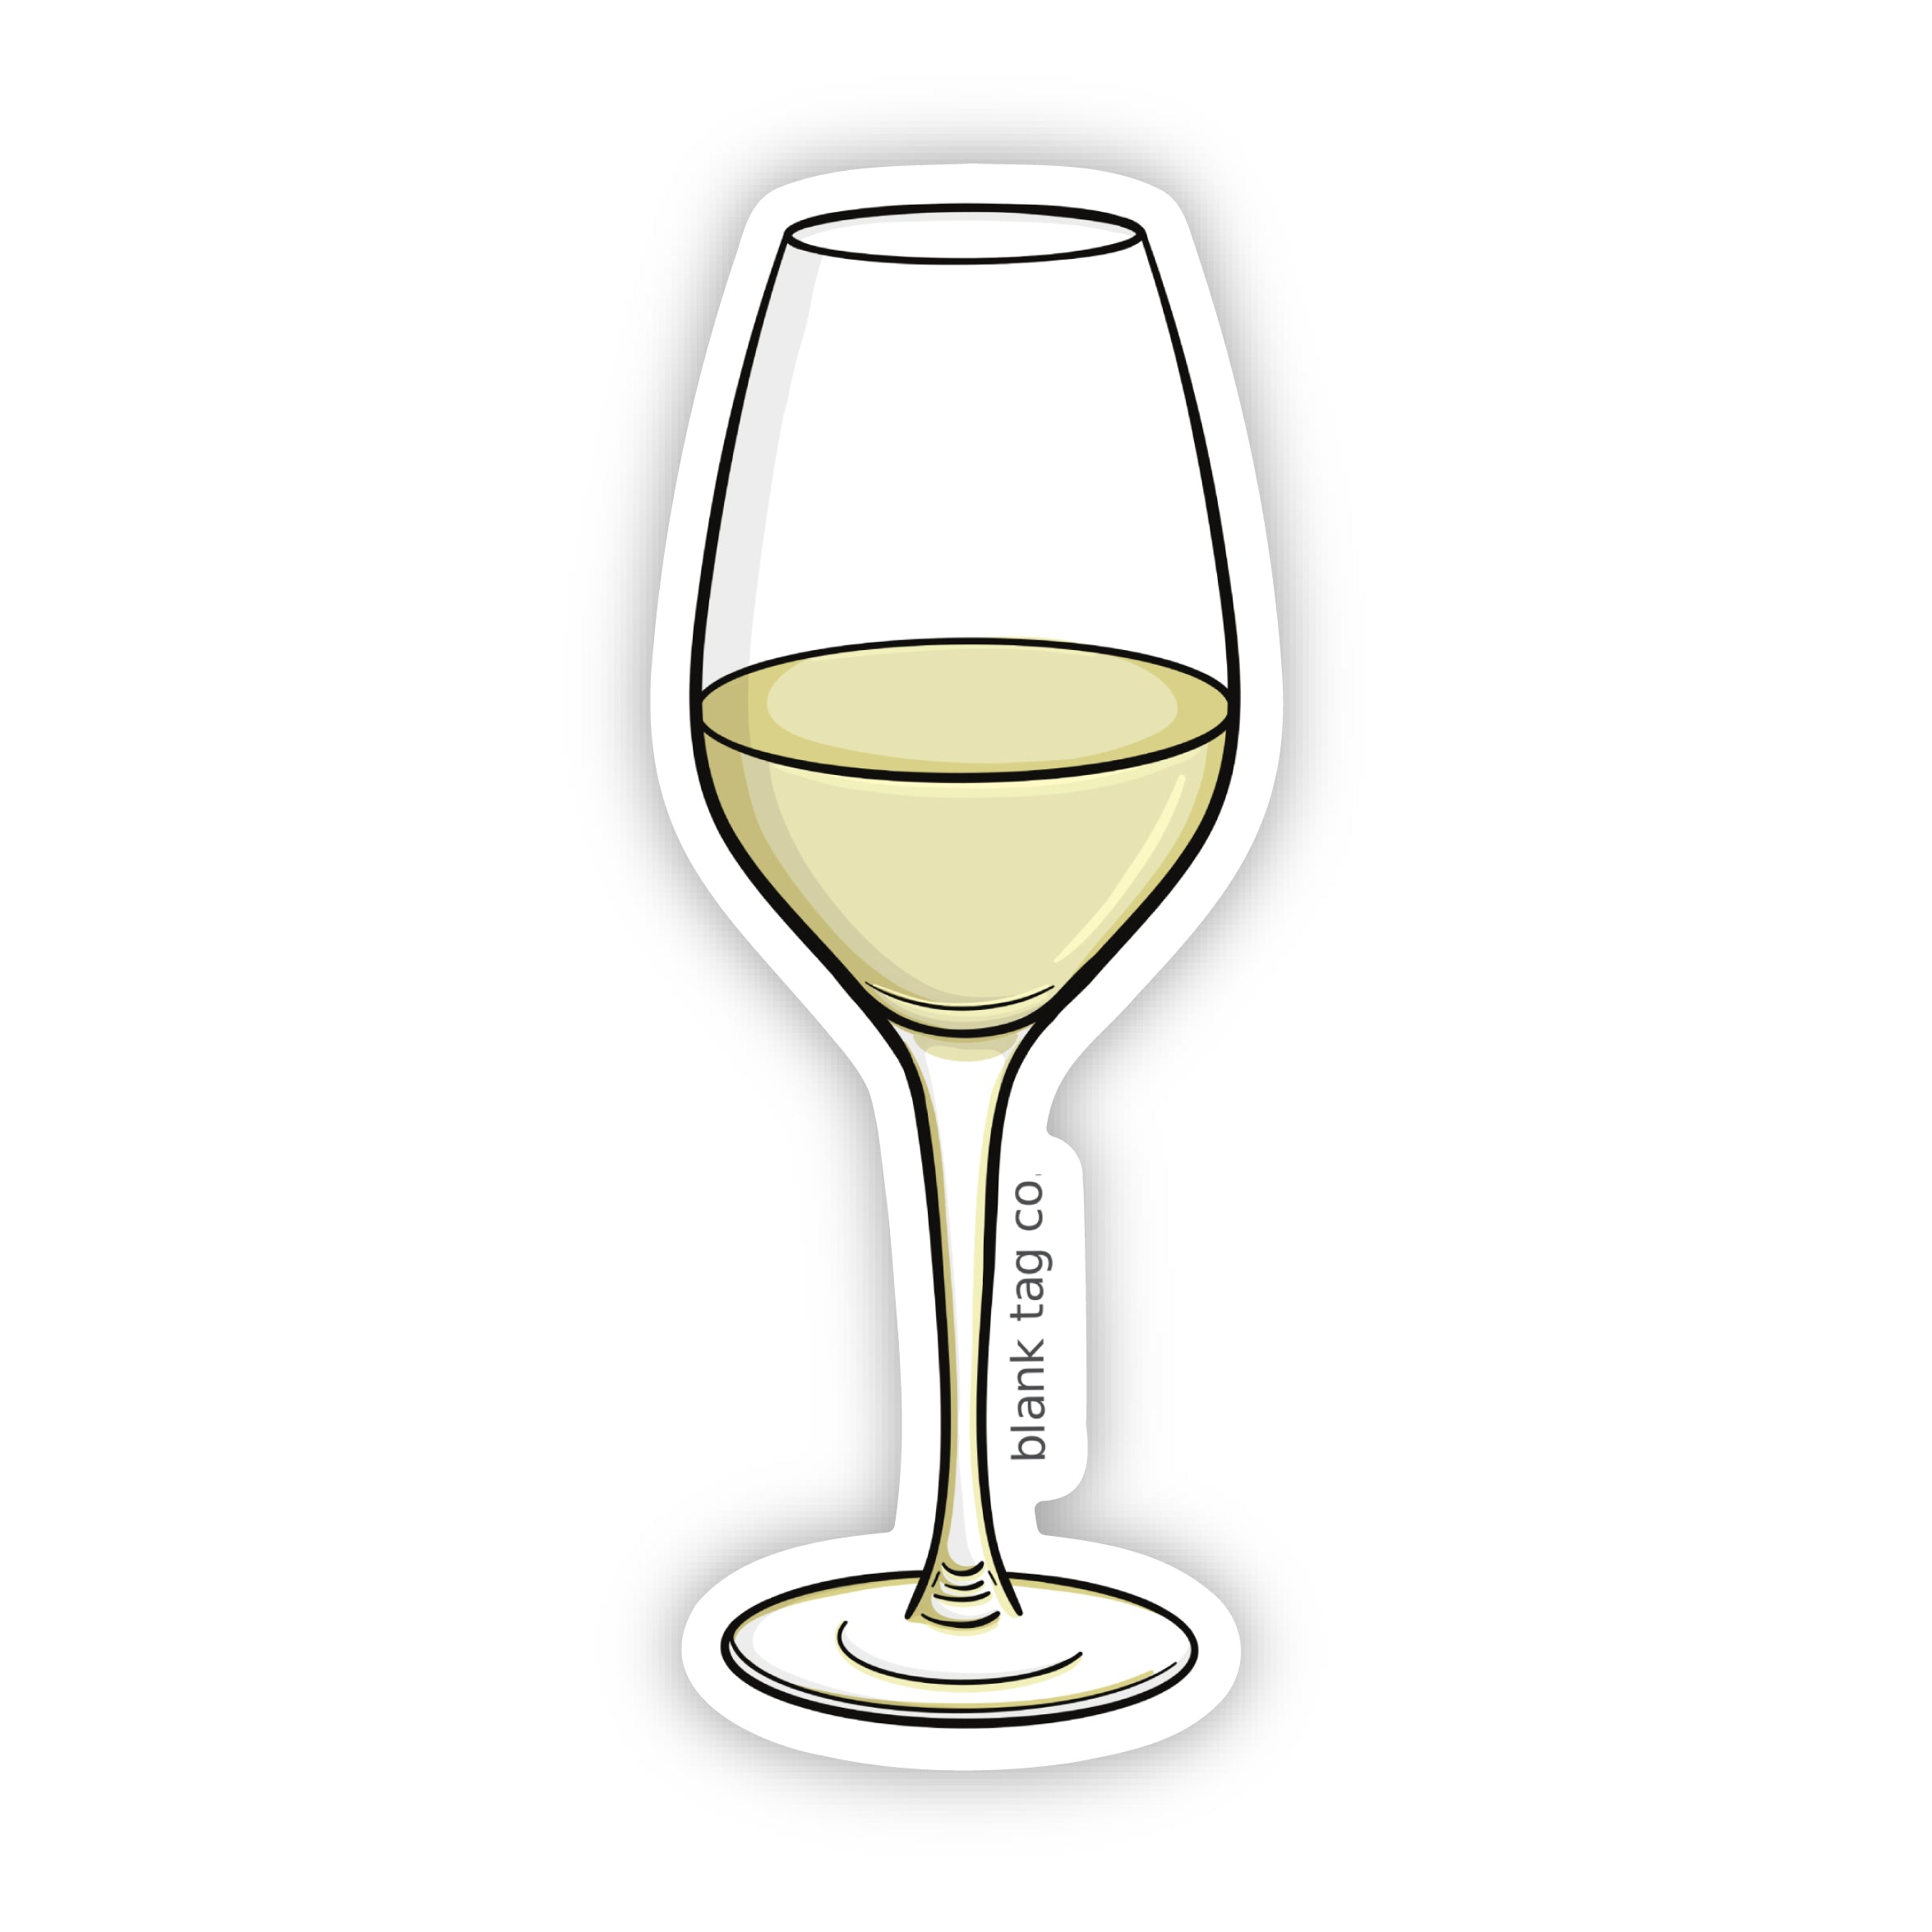 The White Wine Sticker